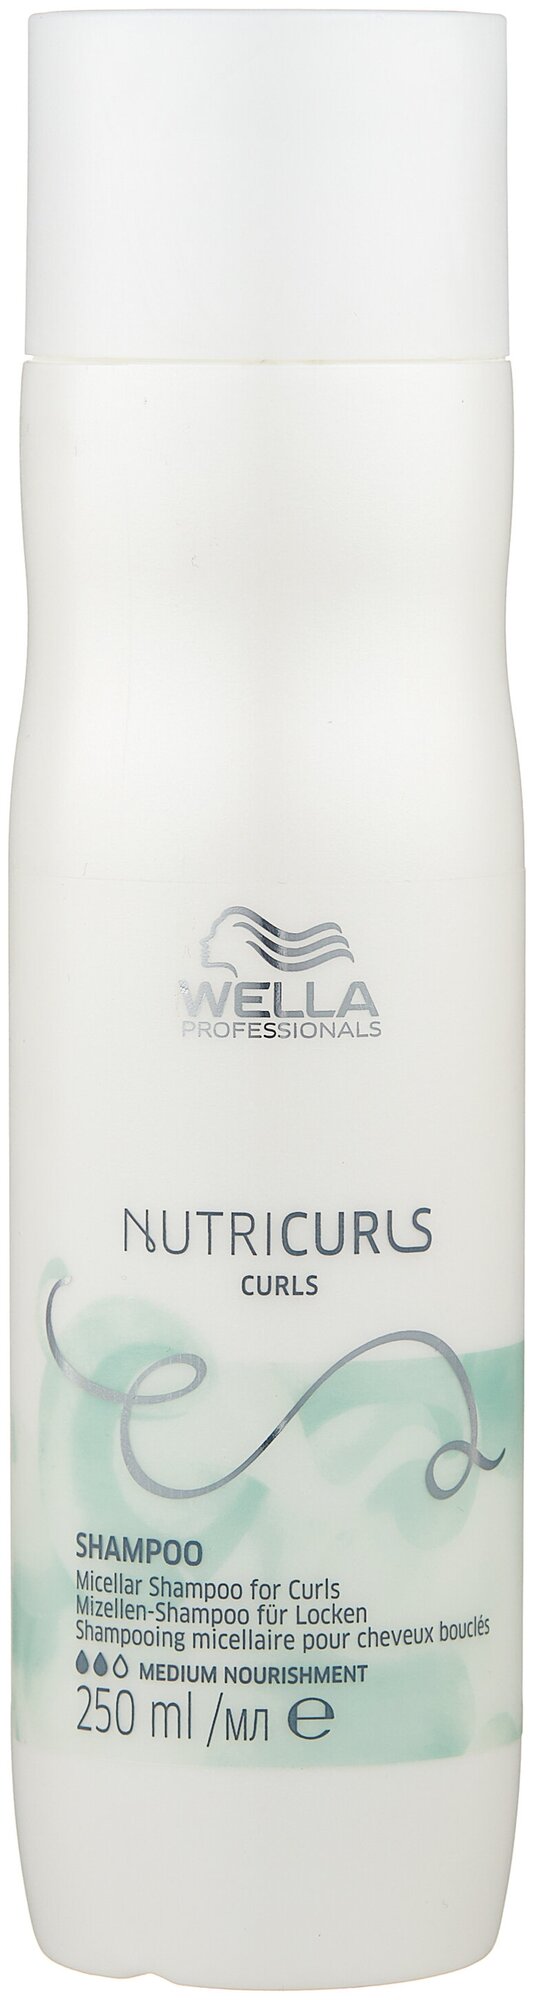 Wella Professionals шампунь Nutricurls Curls мицеллярный, 250 мл